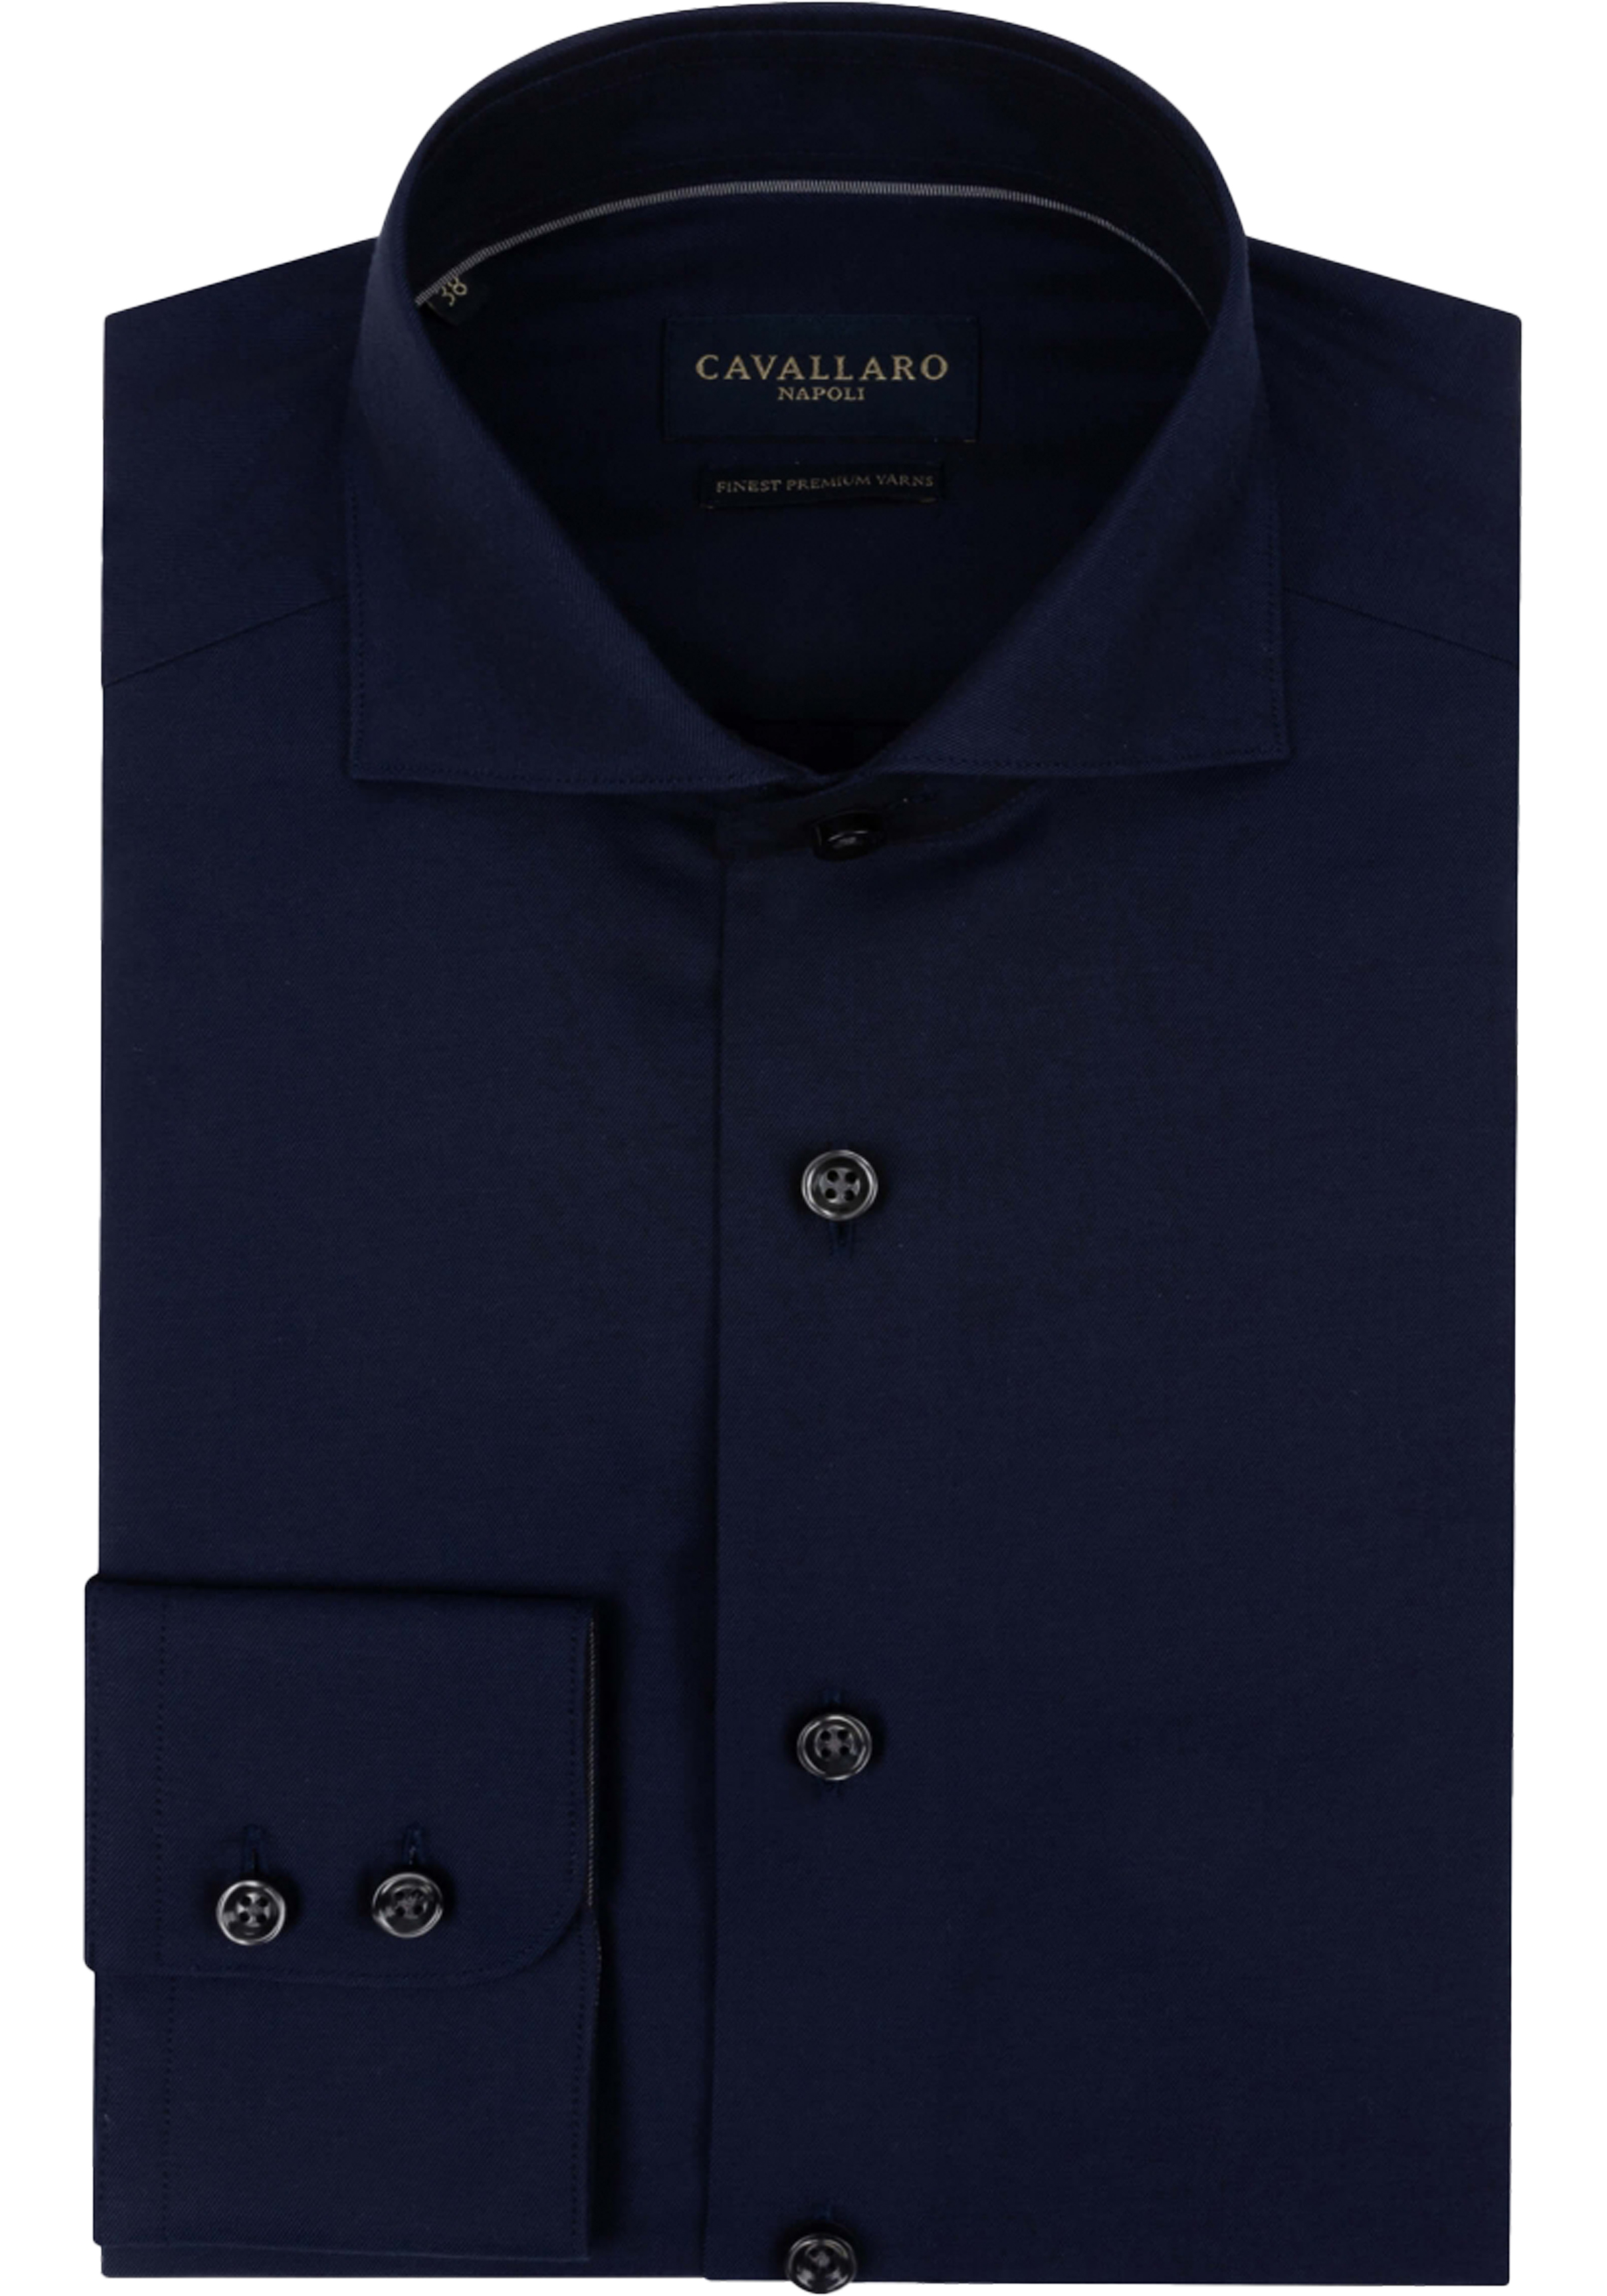 Cavallaro Napoli Angelo slim fit overhemd, twill, donkerblauw